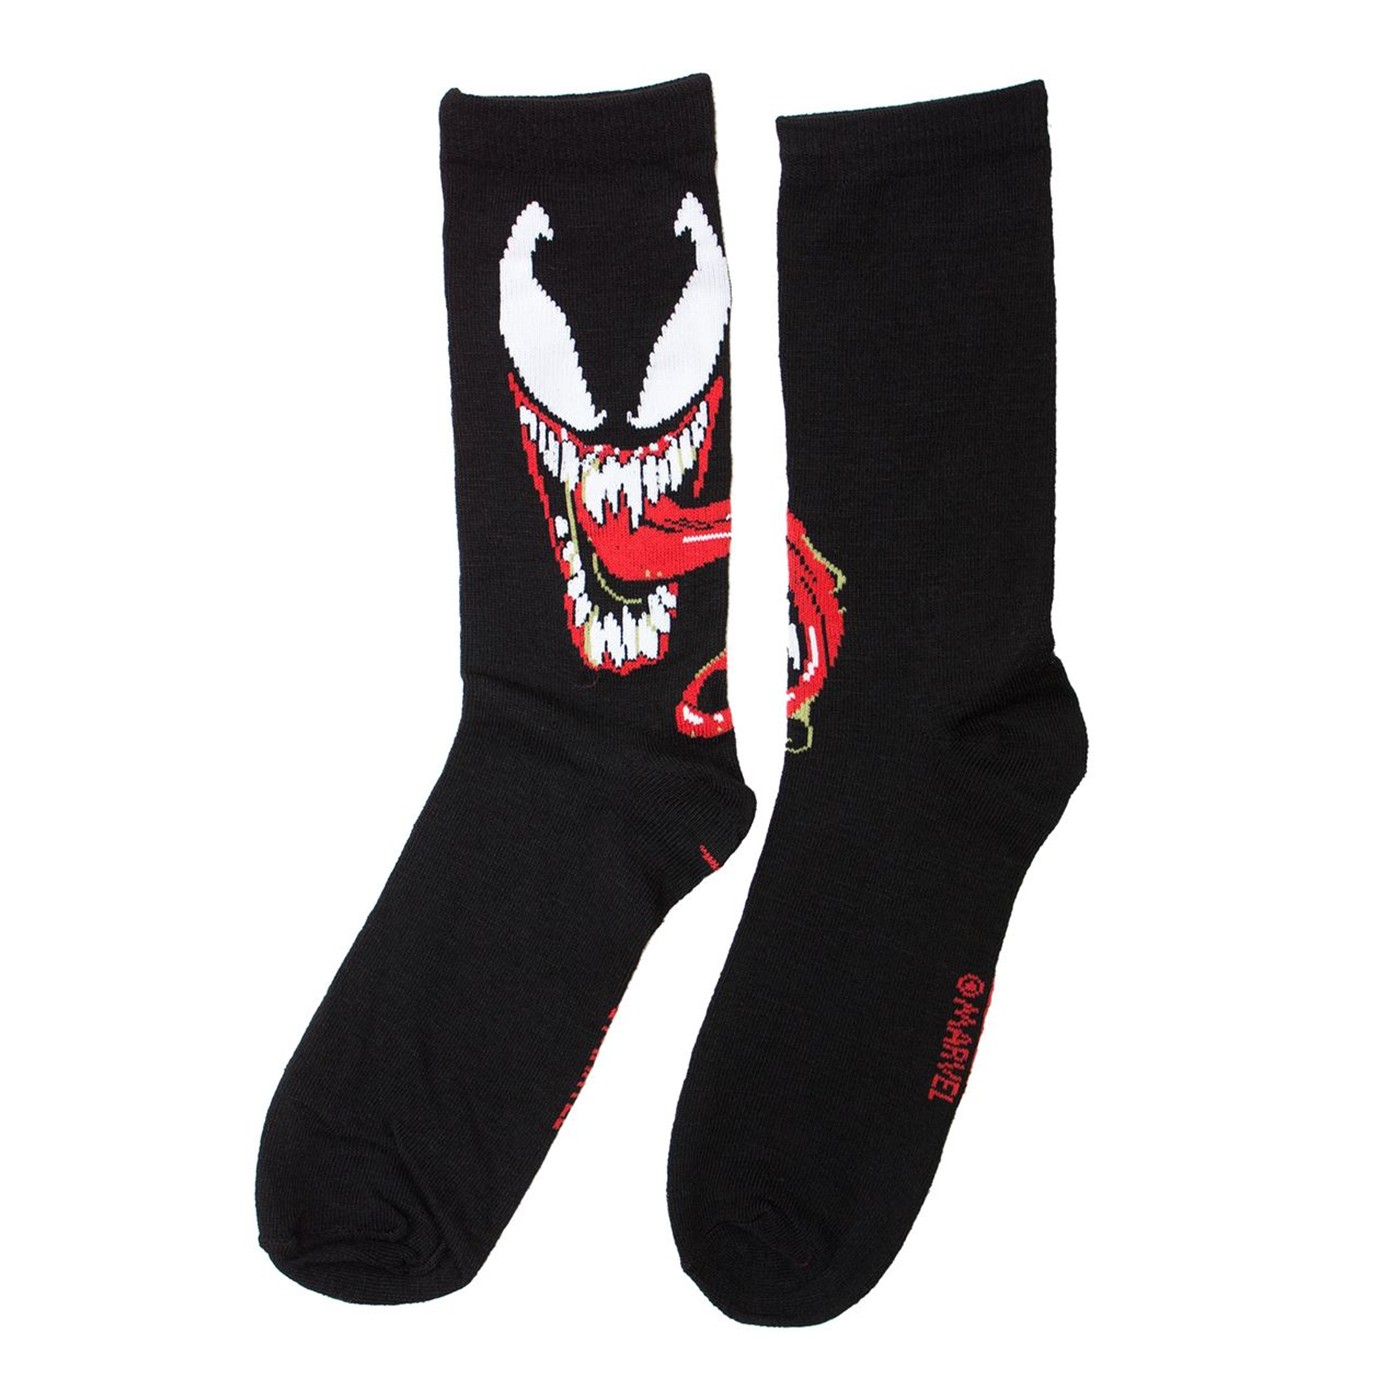 We Are Venom Crew Socks